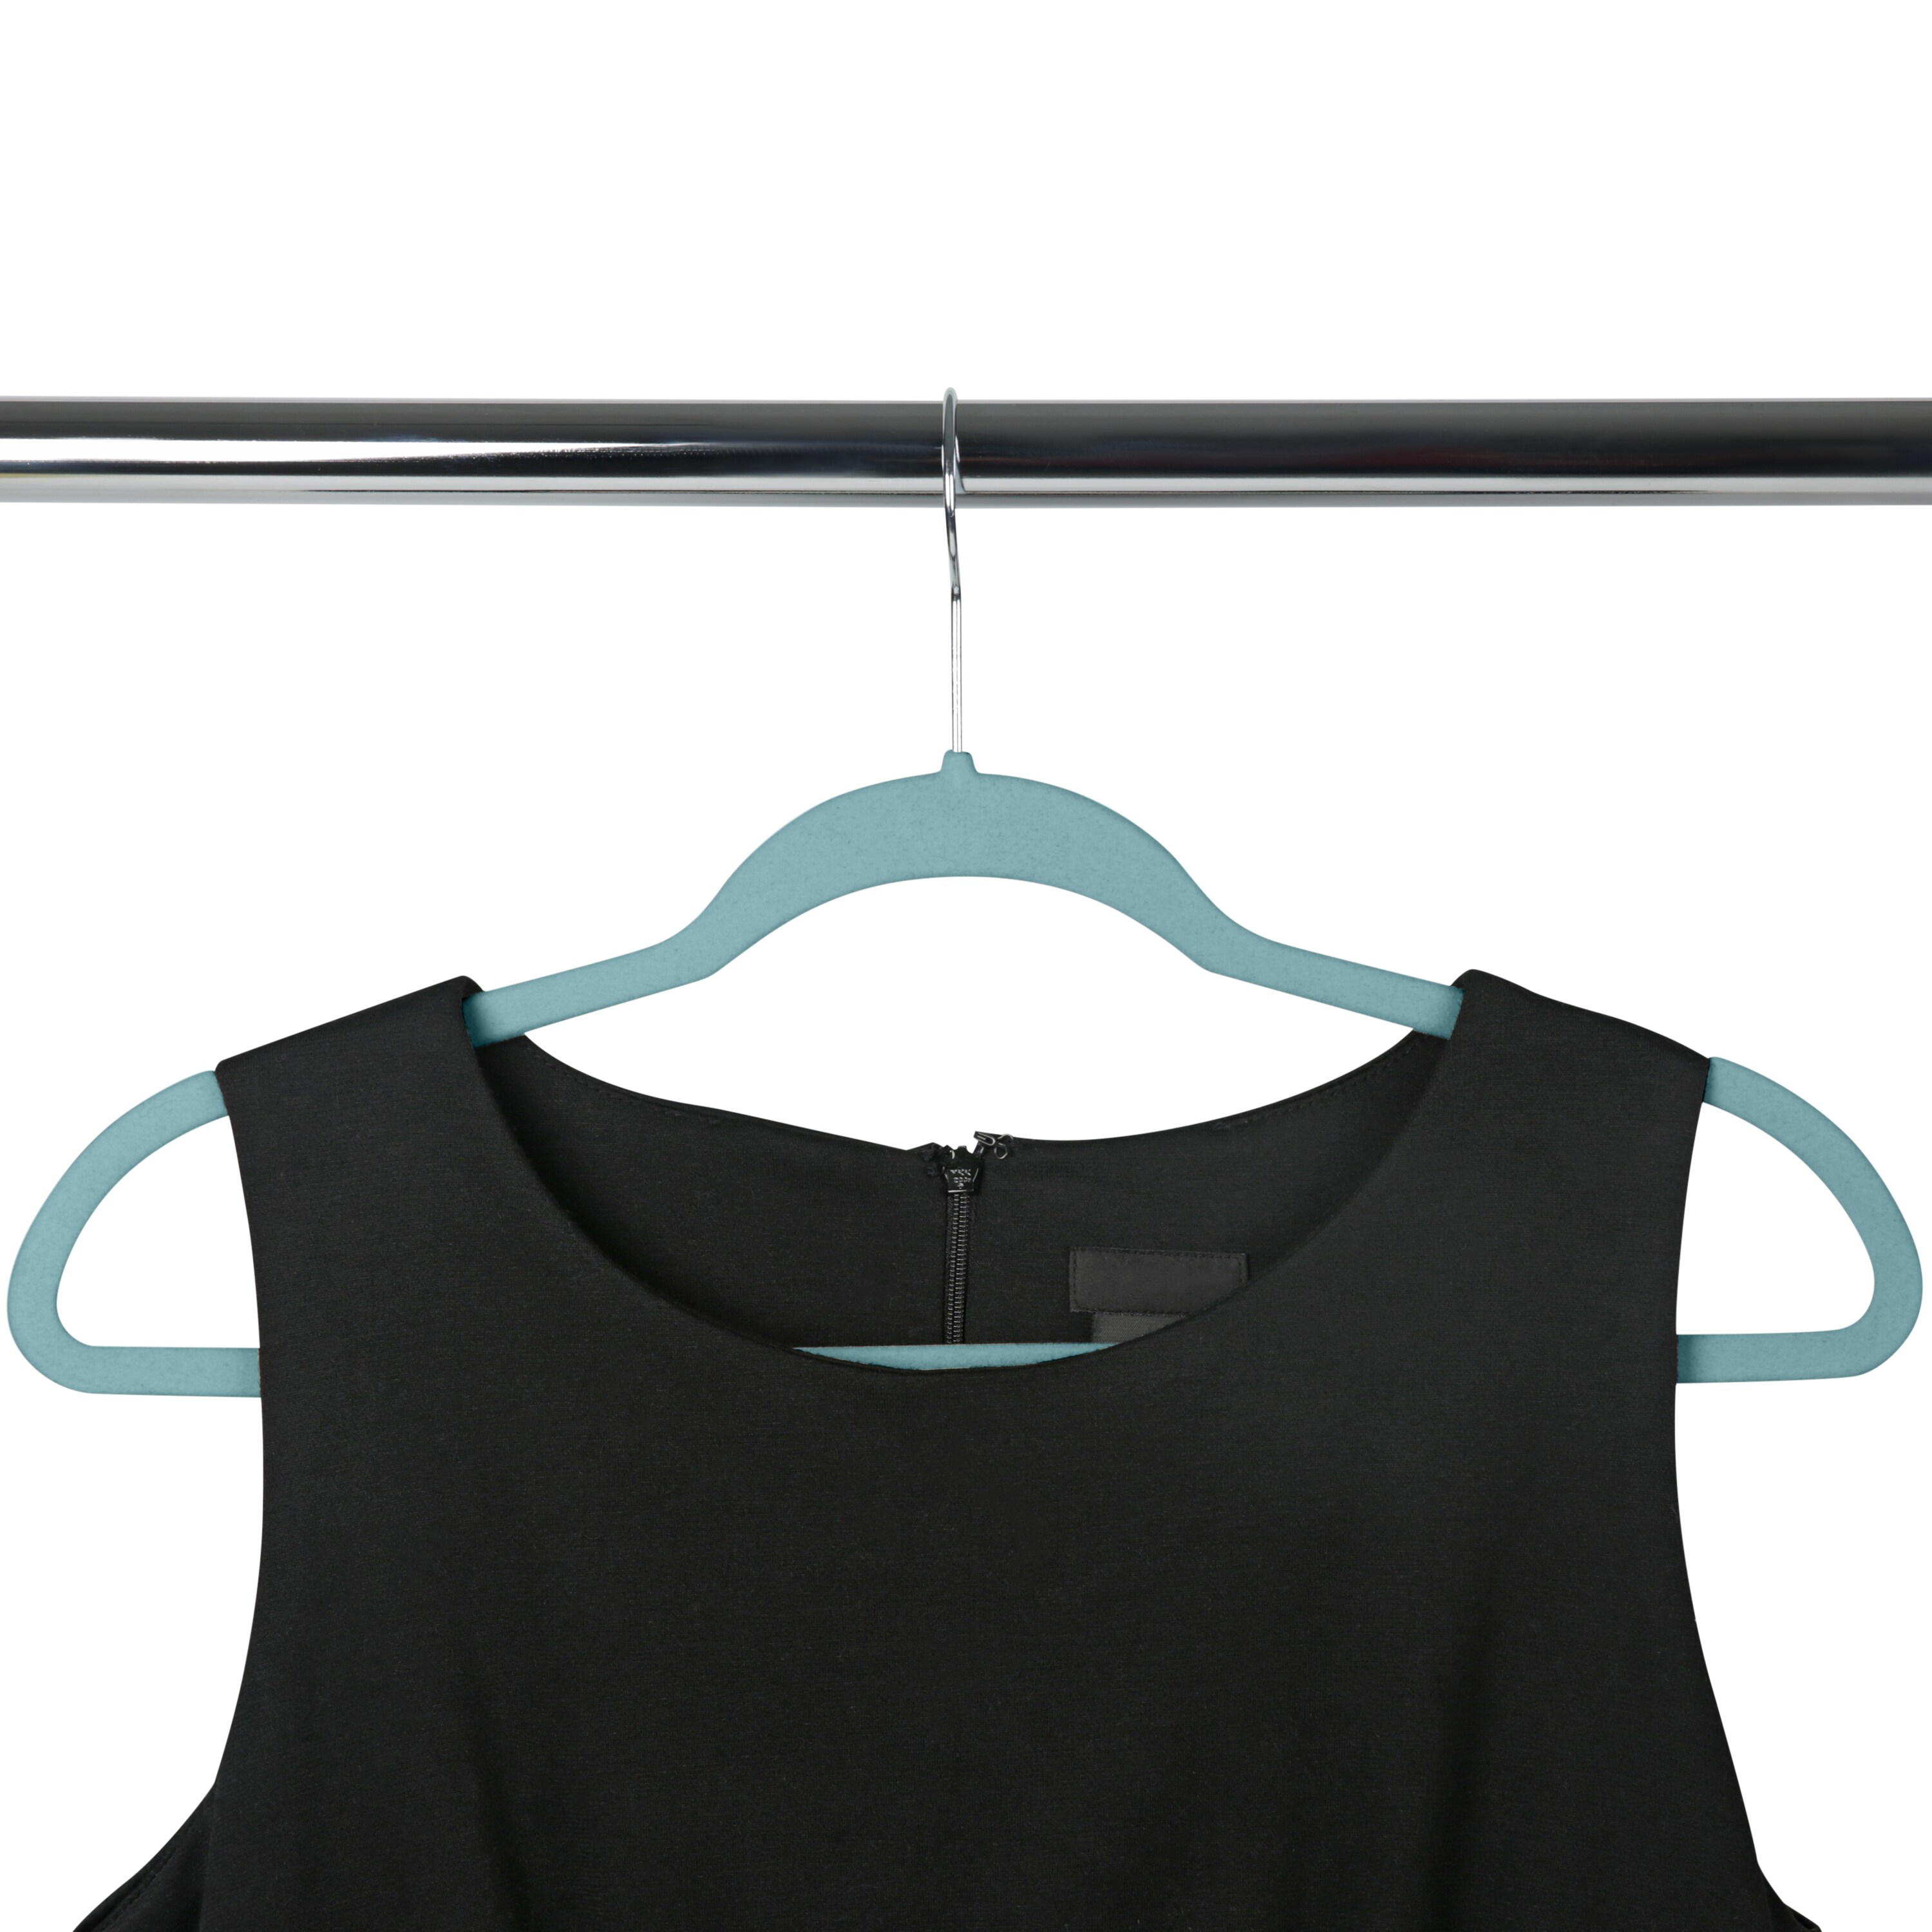 Simplify 10-Pack Plastic Non-slip Grip Clothing Hanger (Grey) in